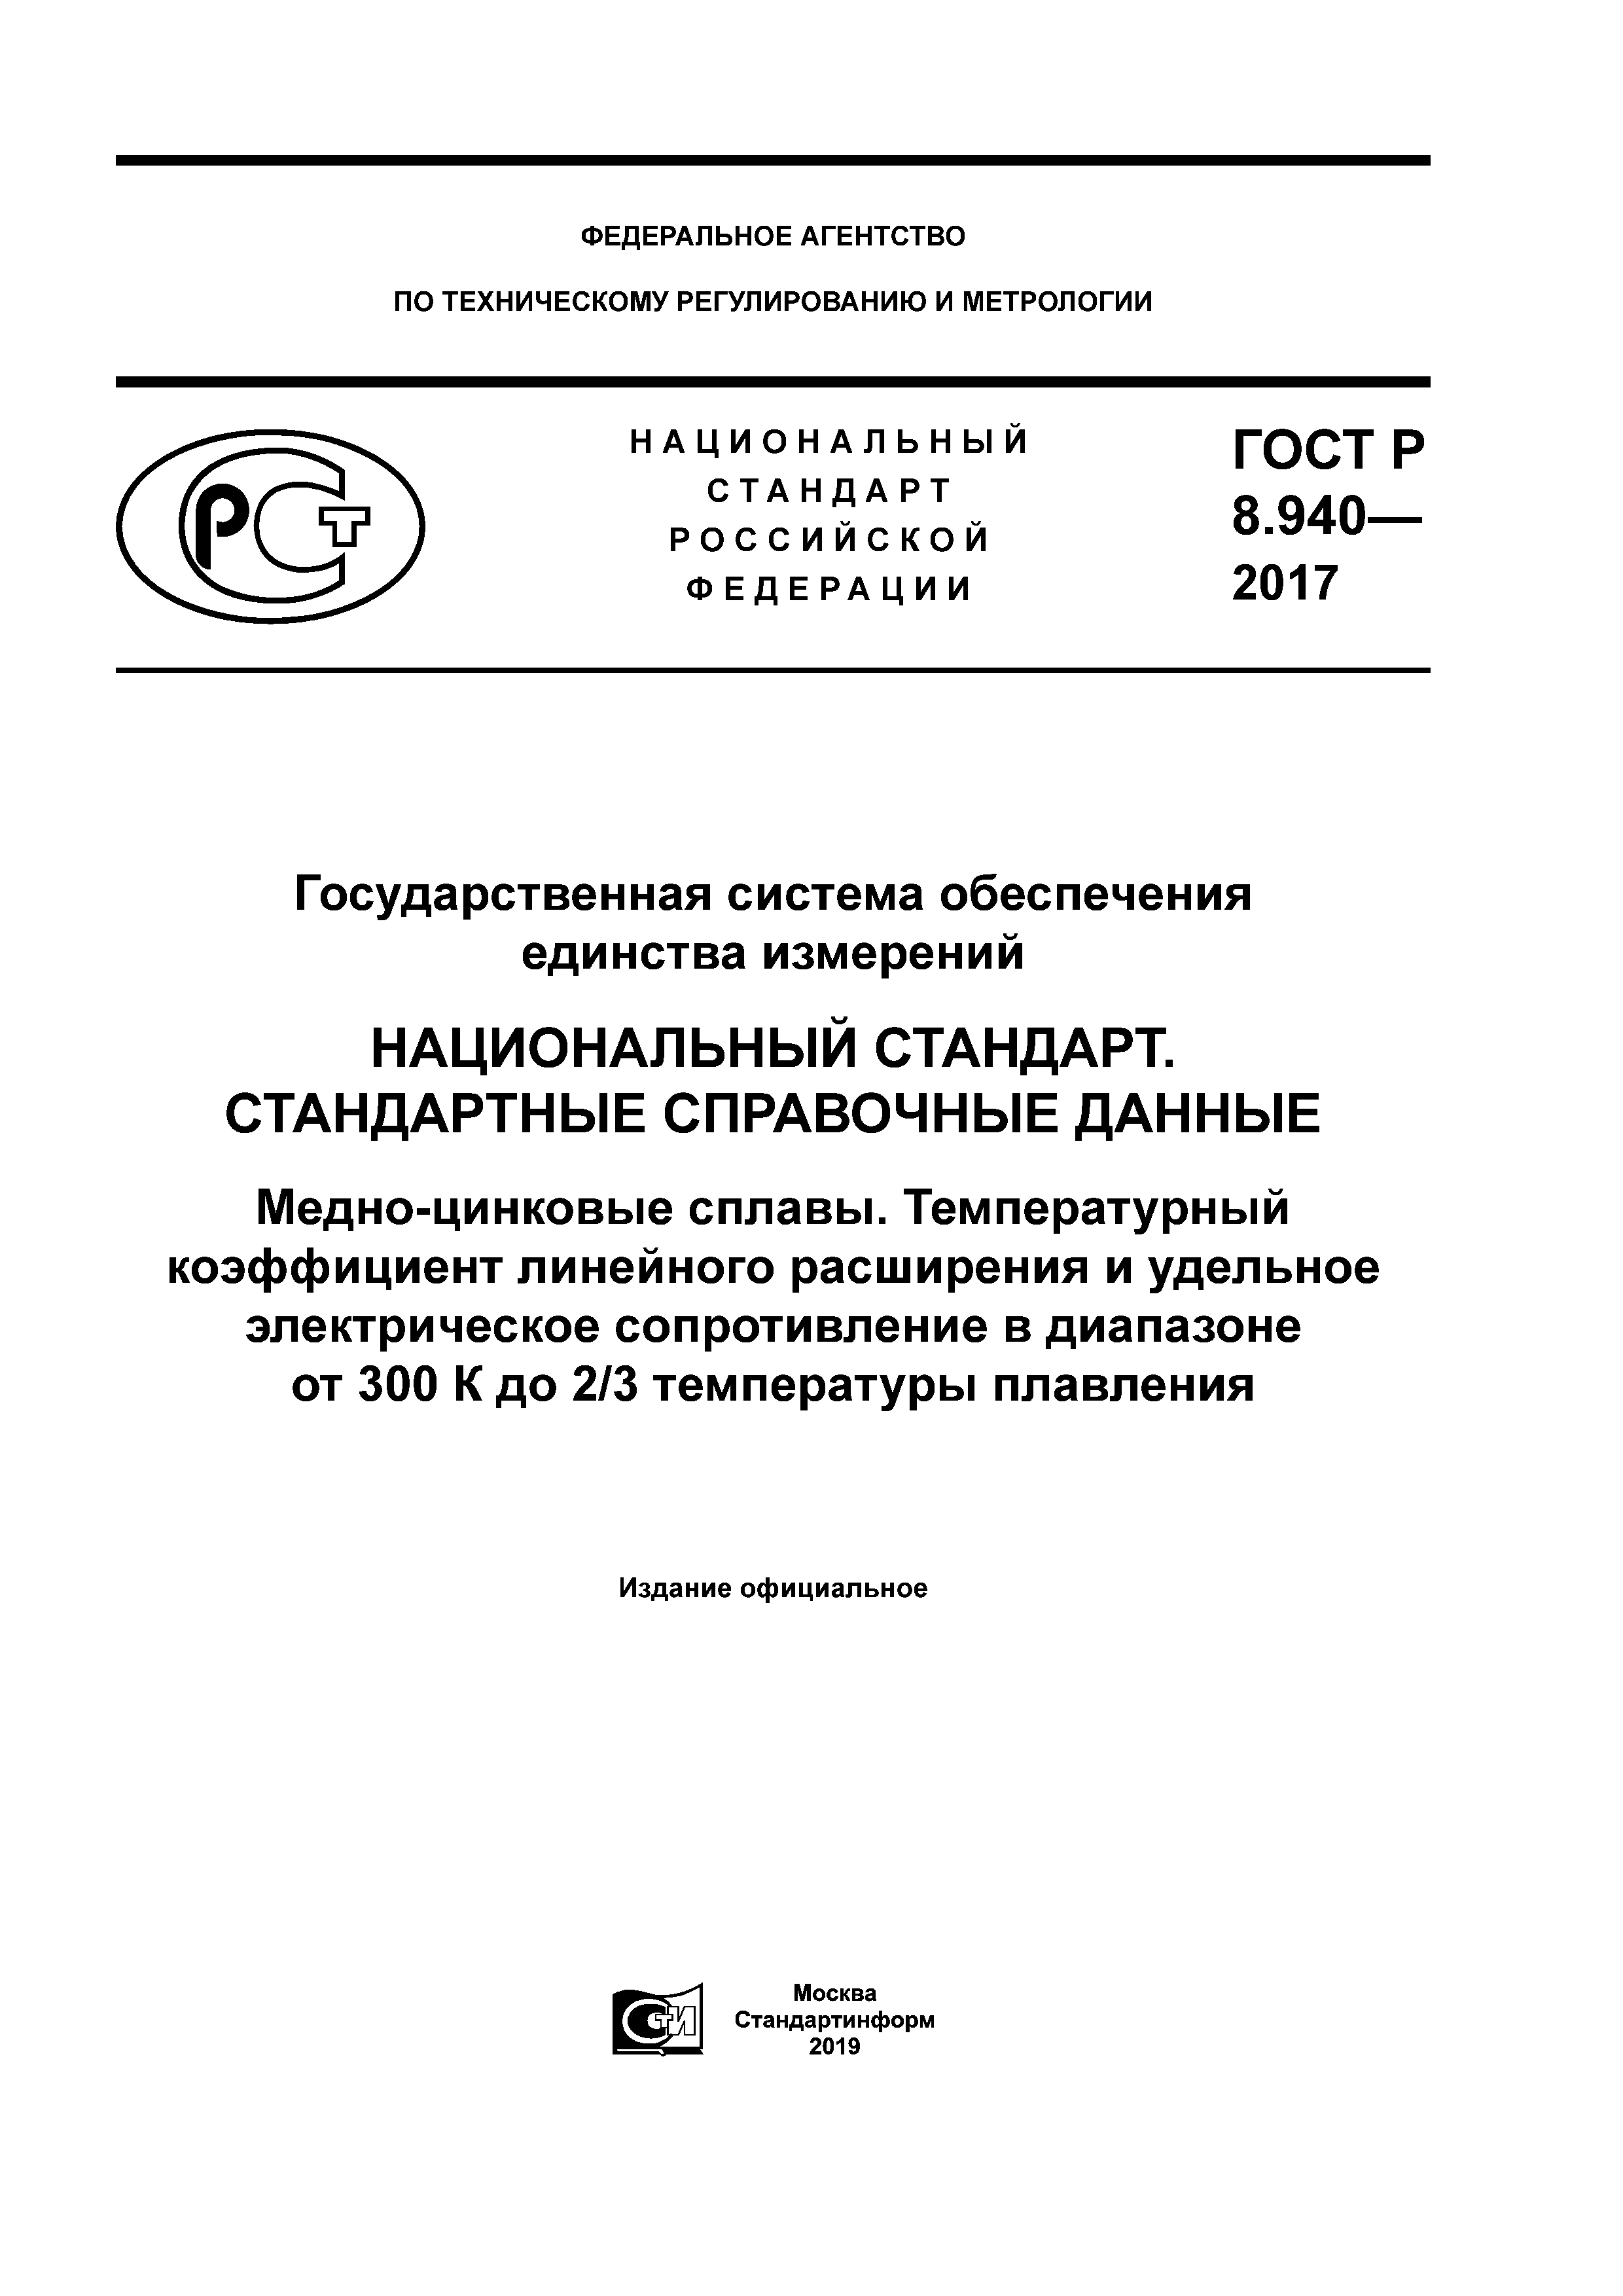 ГОСТ Р 8.940-2017